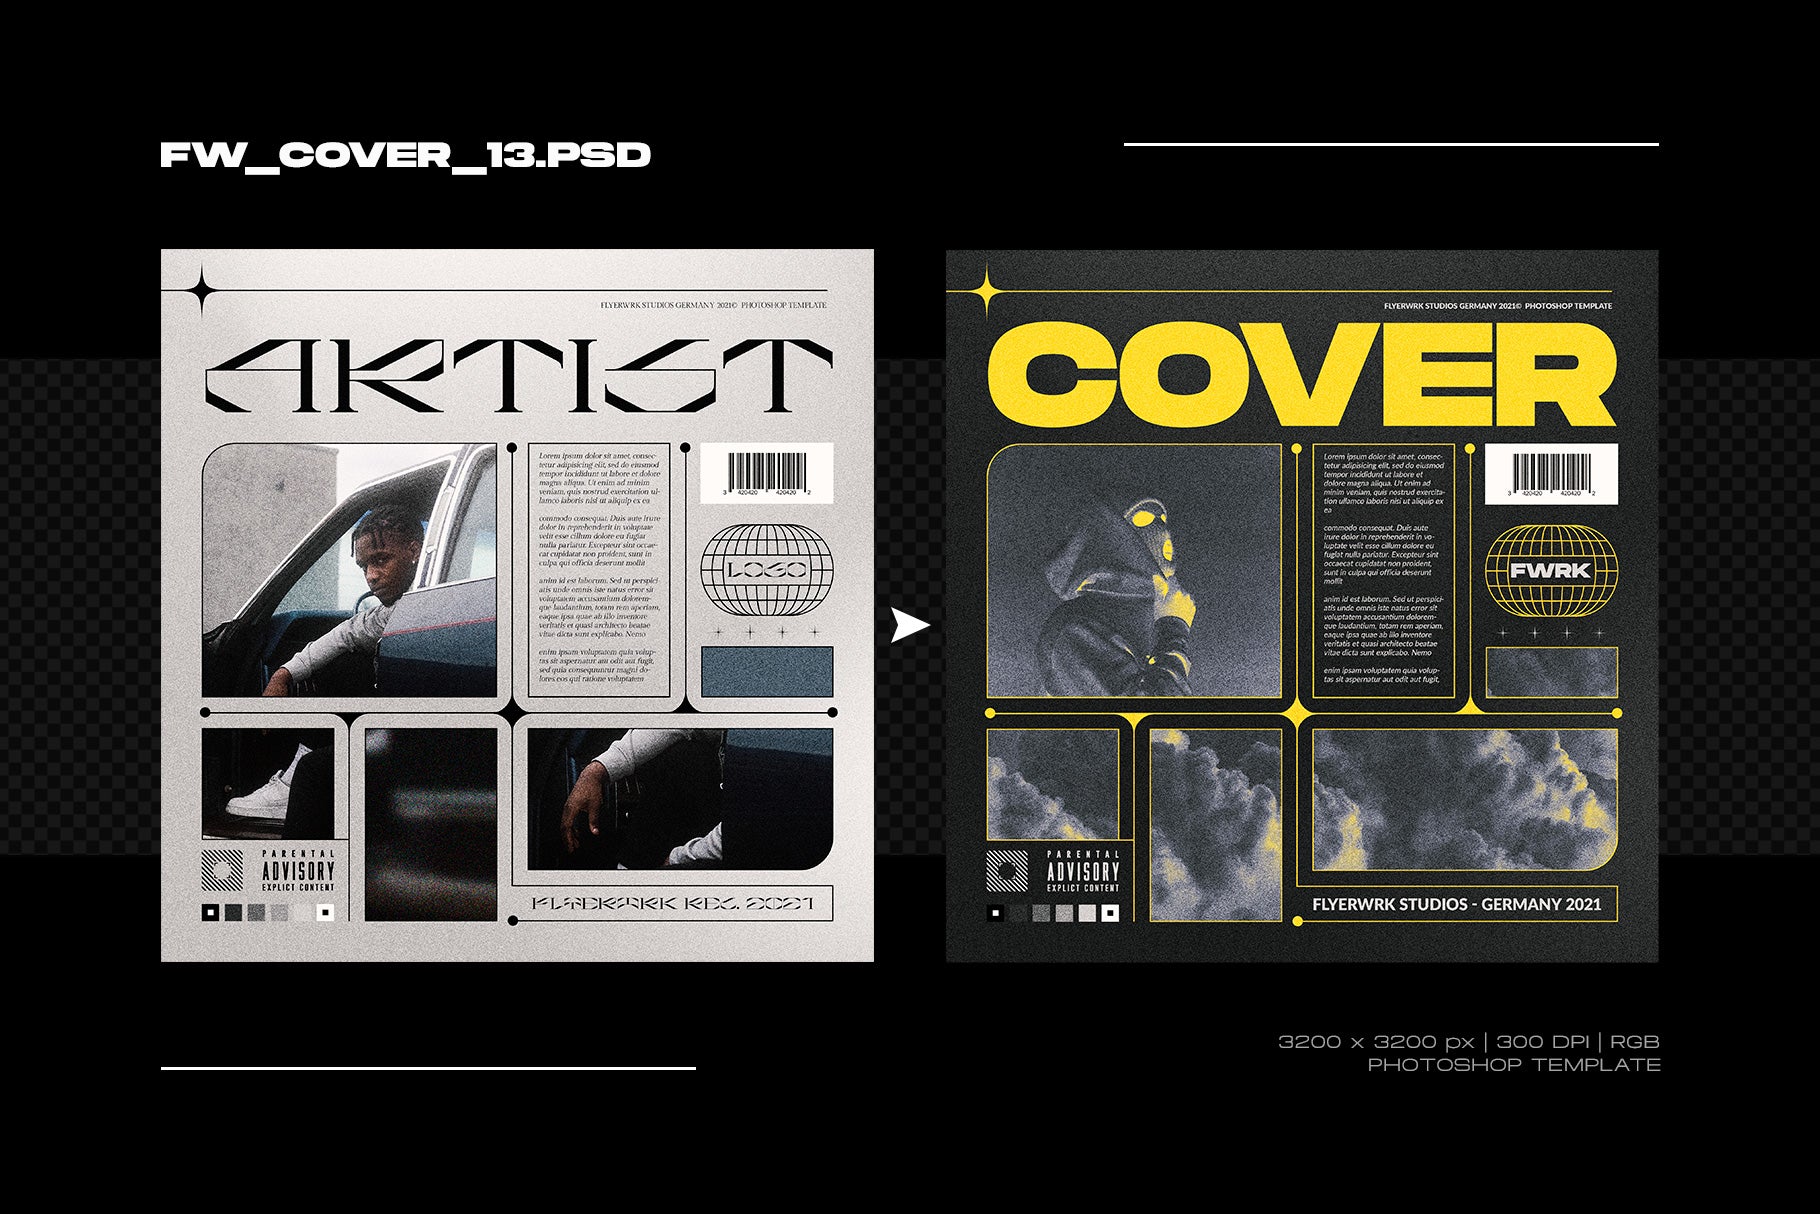 Cover Designs 11-15